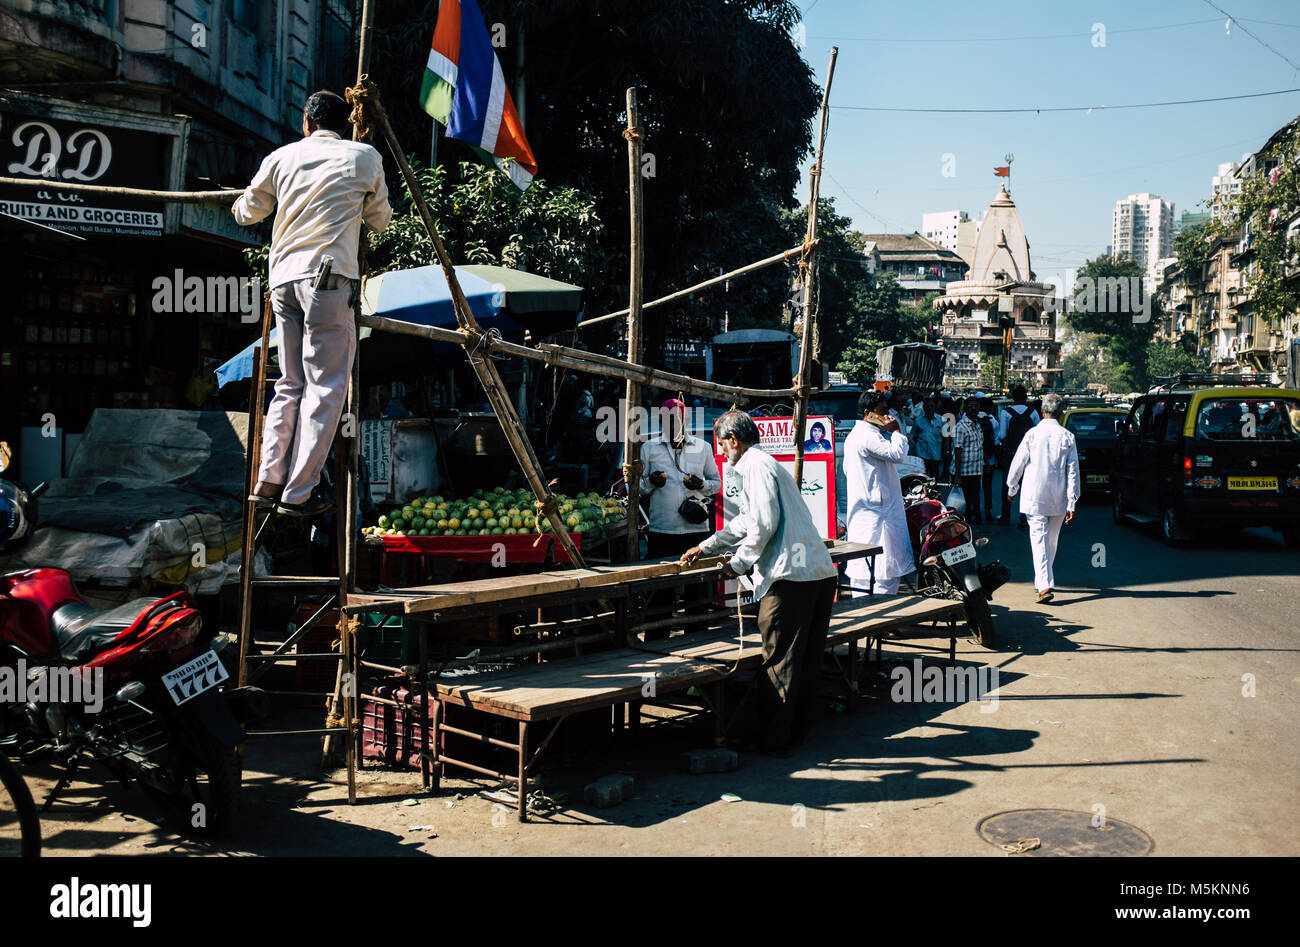 People walking through a busy market in Mumbai, India Stock Photo